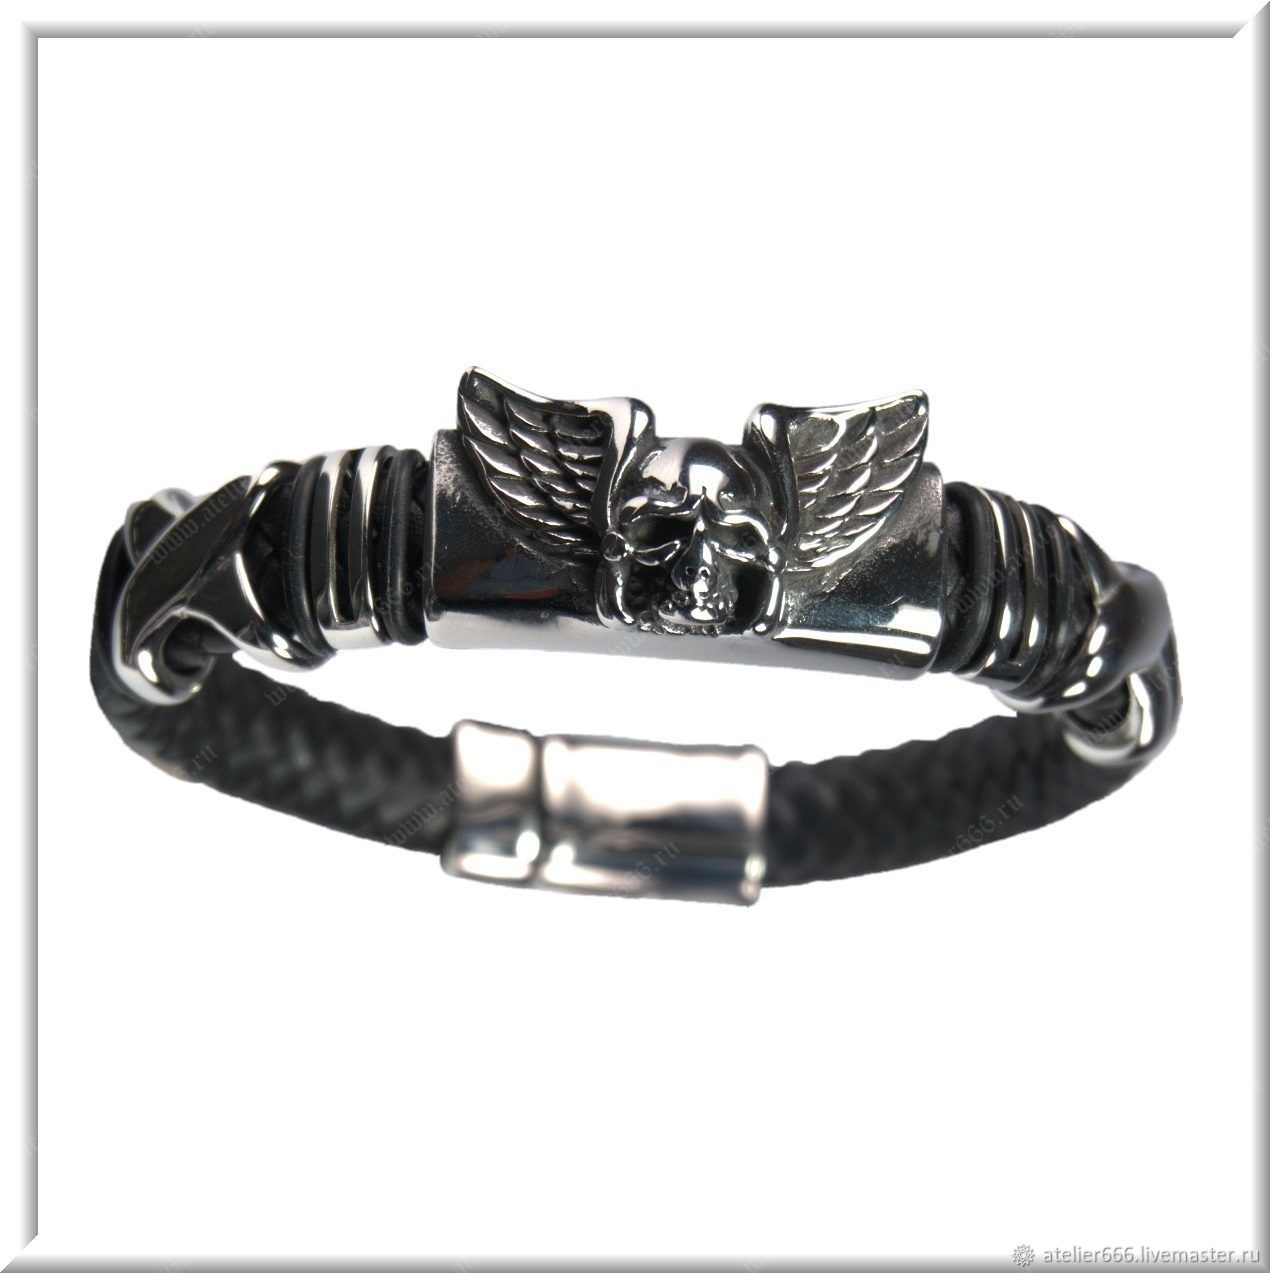 Men's leather bracelet No. 4 accessories steel 316L, Regaliz bracelet, Moscow,  Фото №1